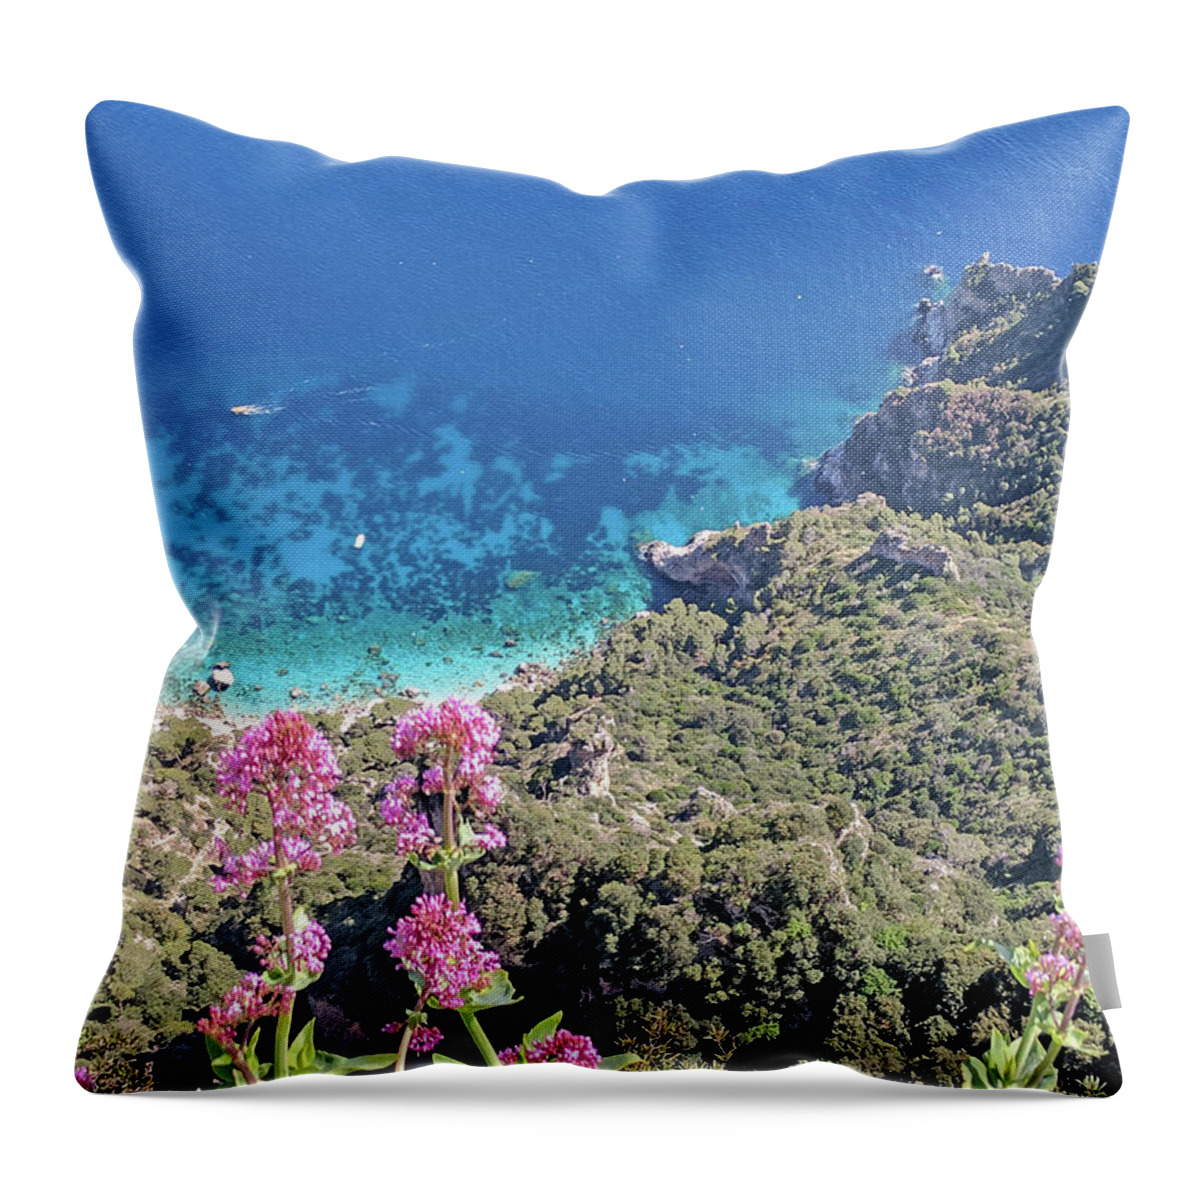 Capri Throw Pillow featuring the photograph Capri, sea and flowers by Yvonne Jasinski